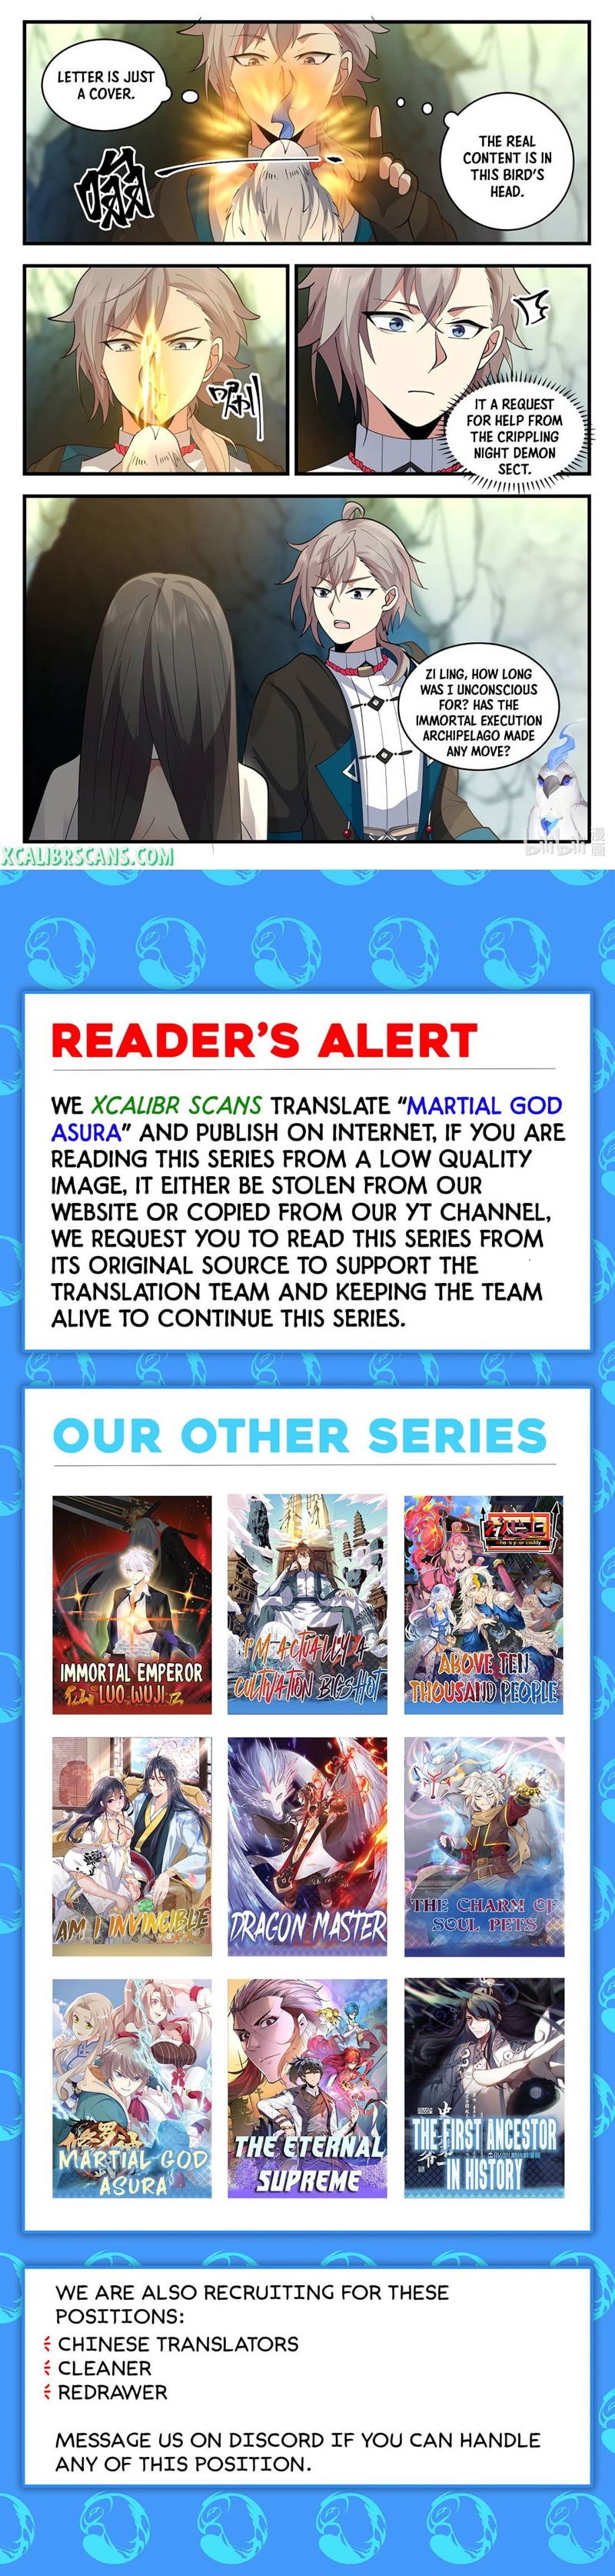 Martial God Asura Chapter 541 page 10